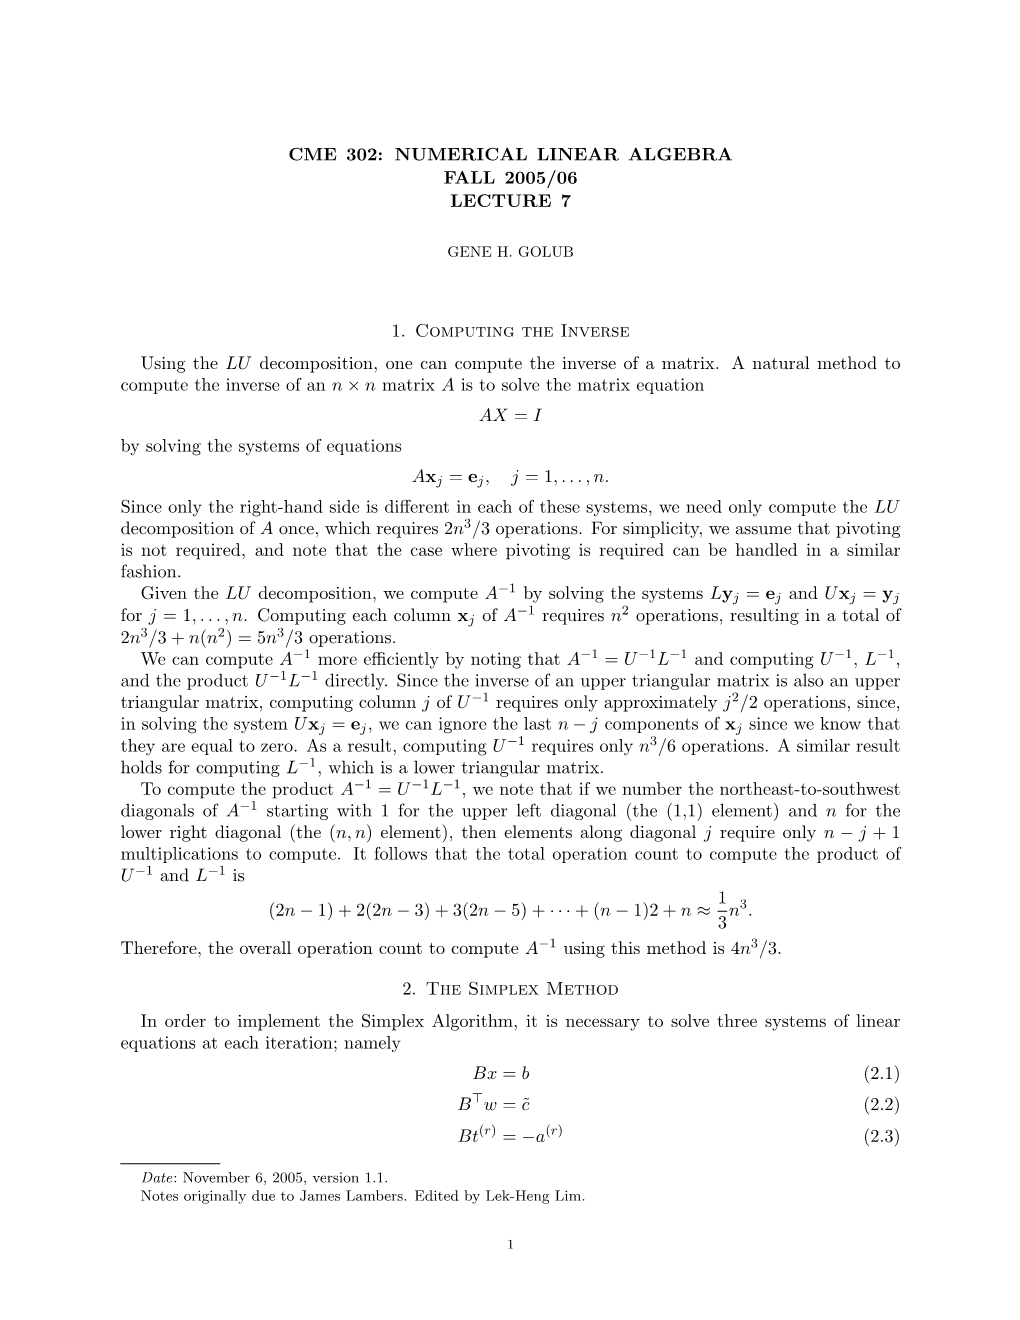 Cme 302: Numerical Linear Algebra Fall 2005/06 Lecture 7